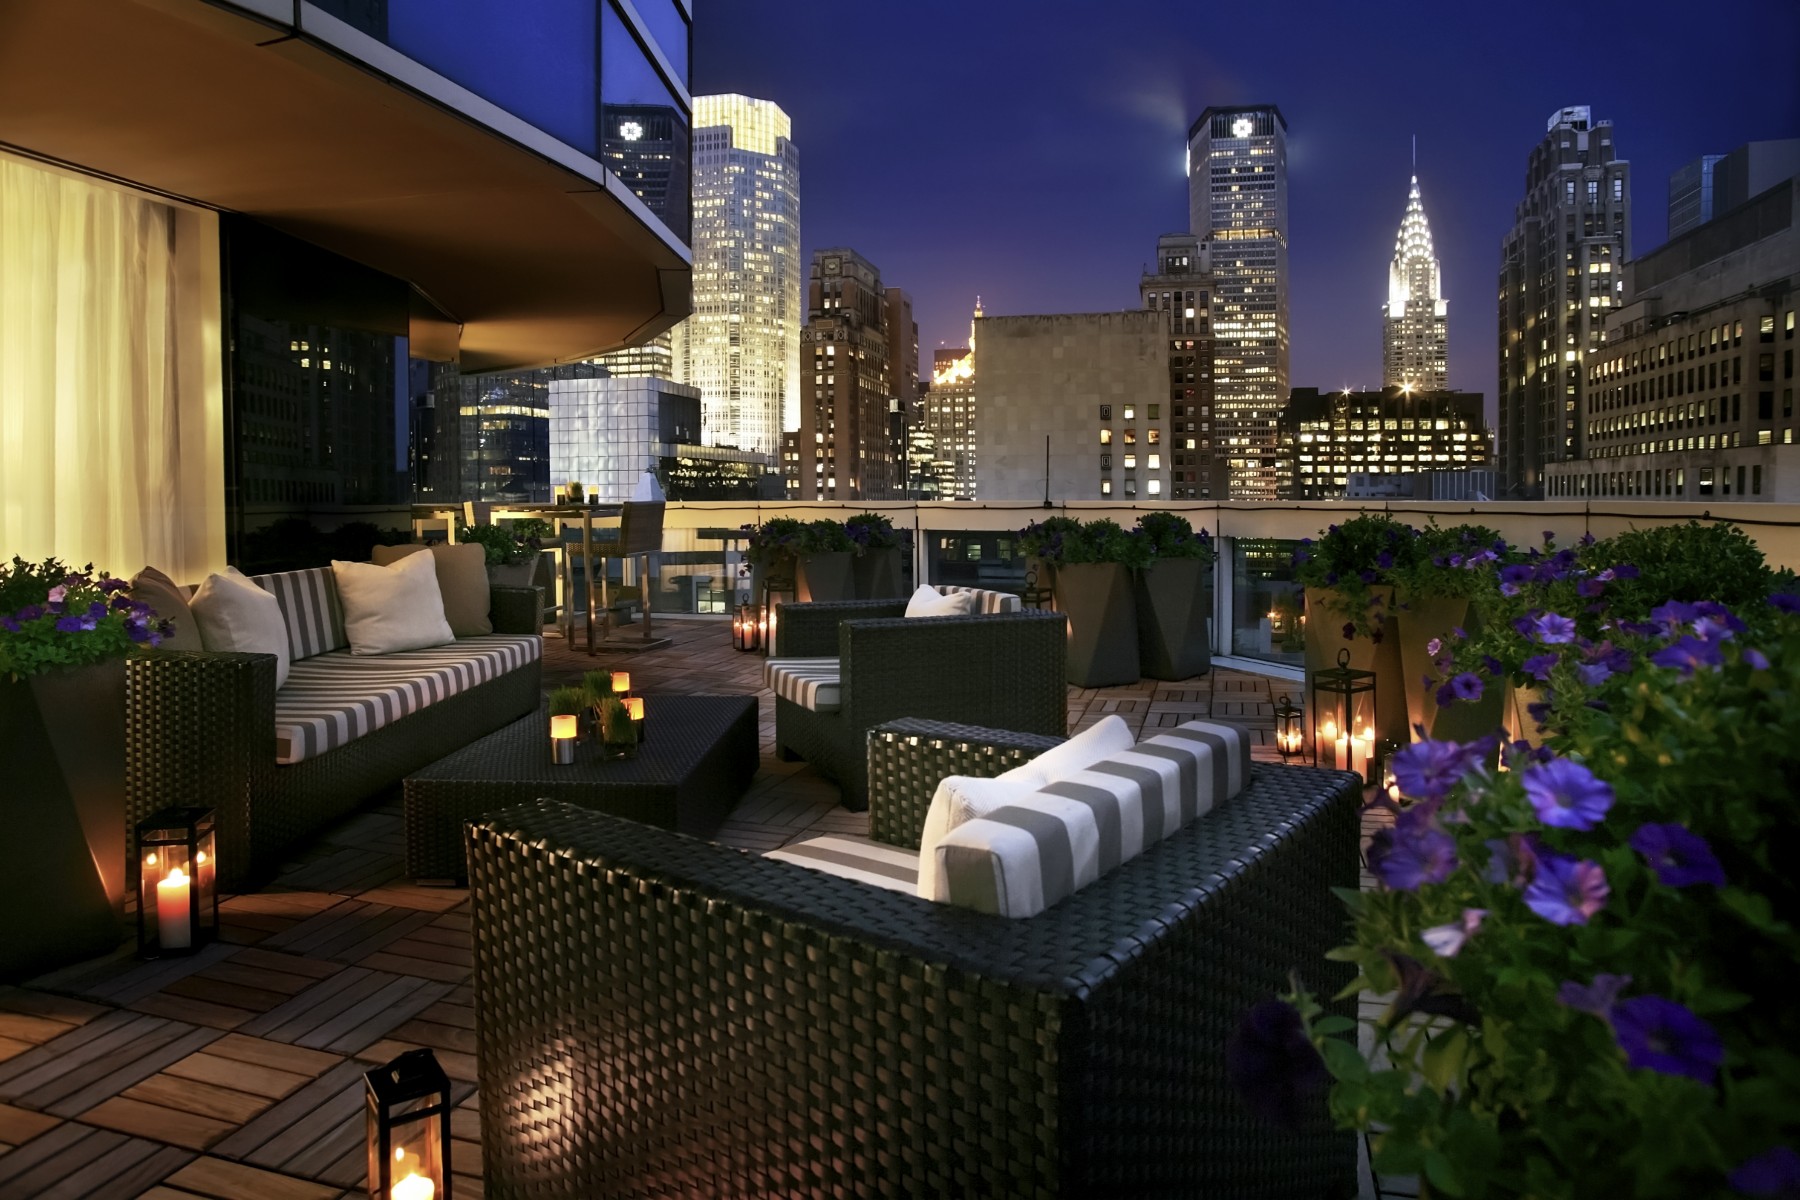 Photo of the hotel Sofitel New York: Prestige terrace suite